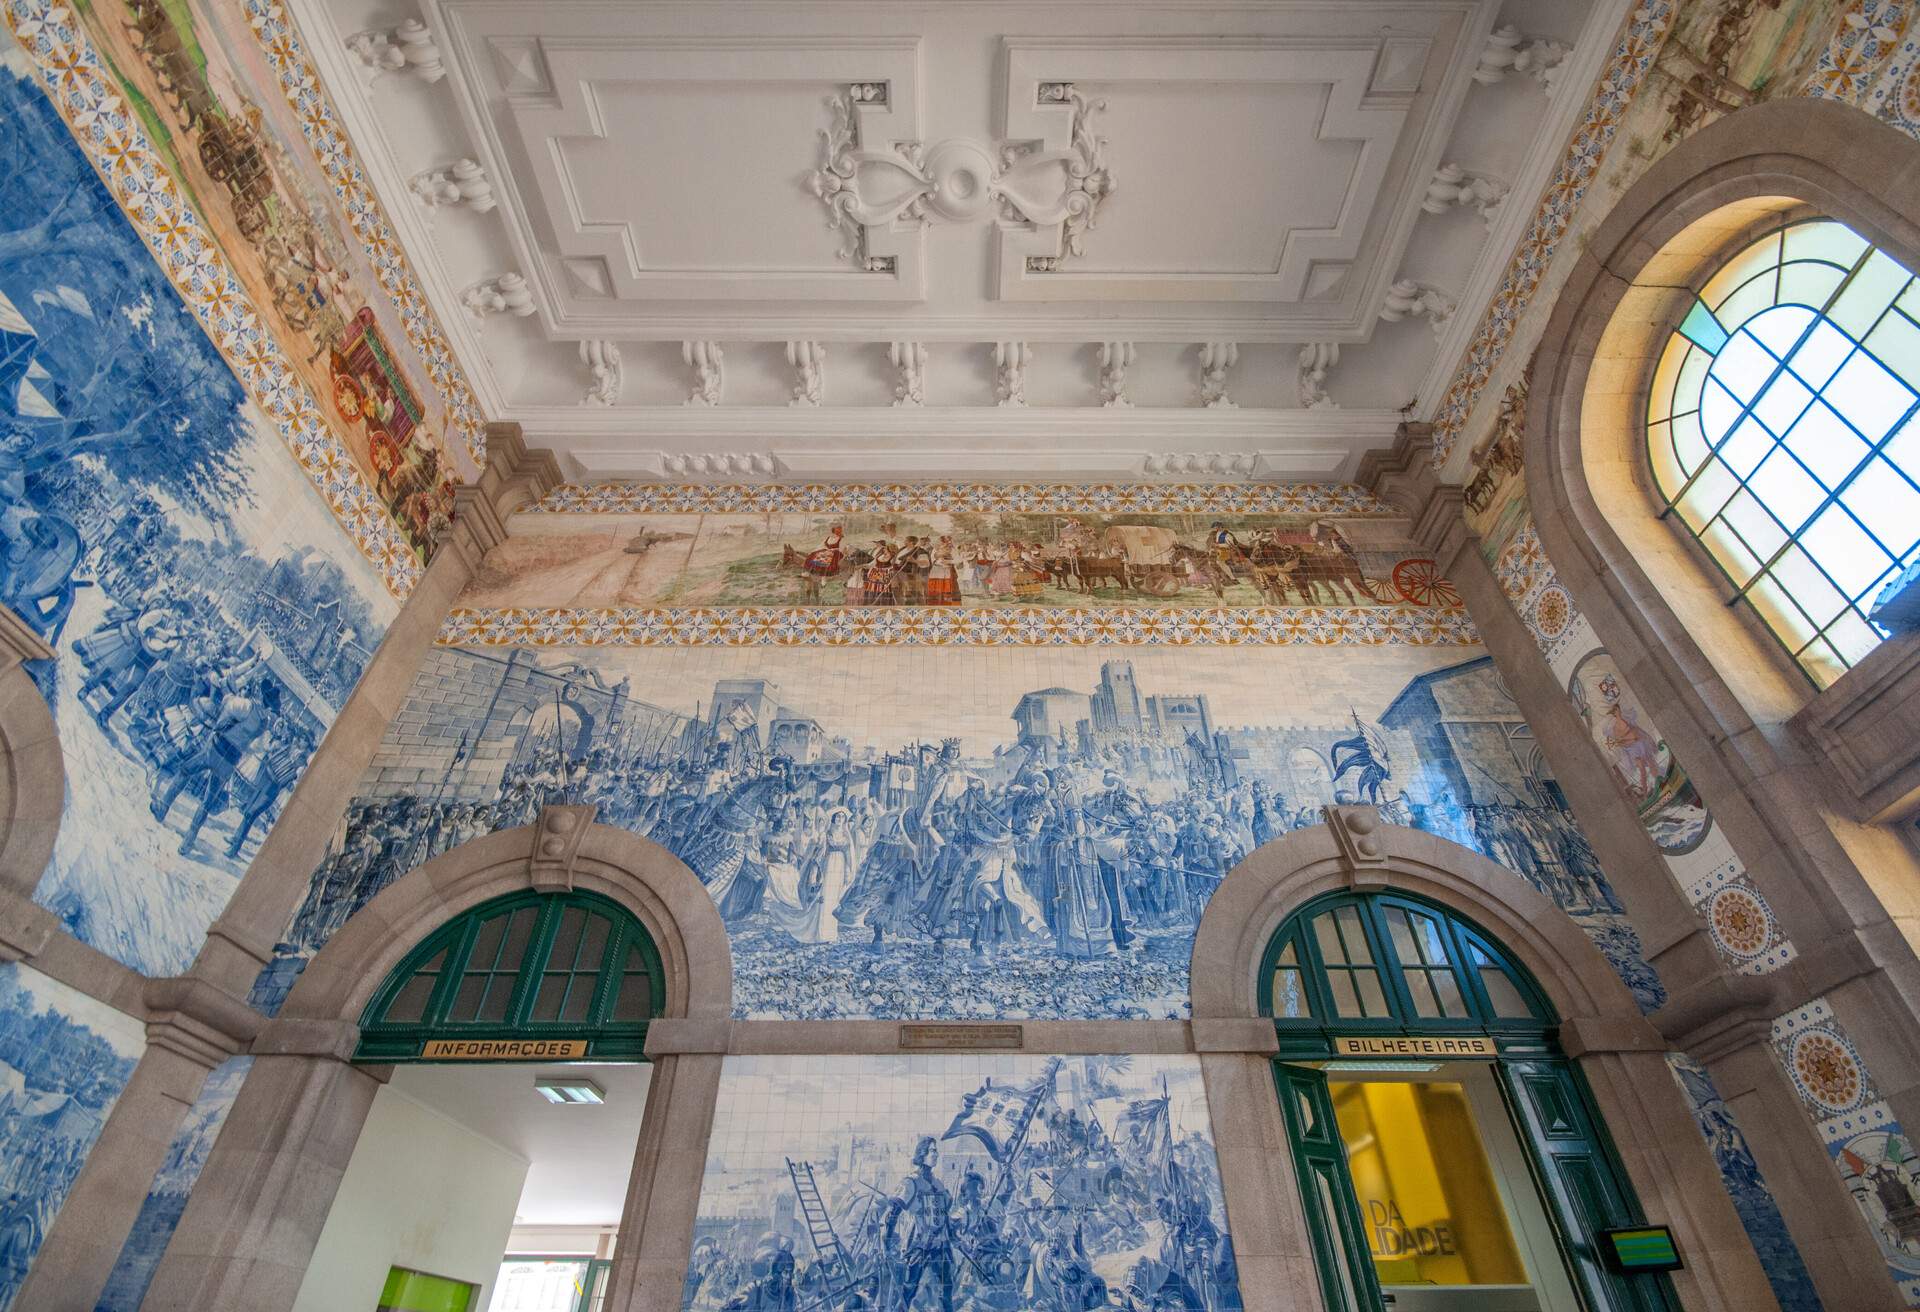 Azulejo tiles in the vestibule of the train station depicting the conquest of Cueta, Porto, Portugal, Europe.